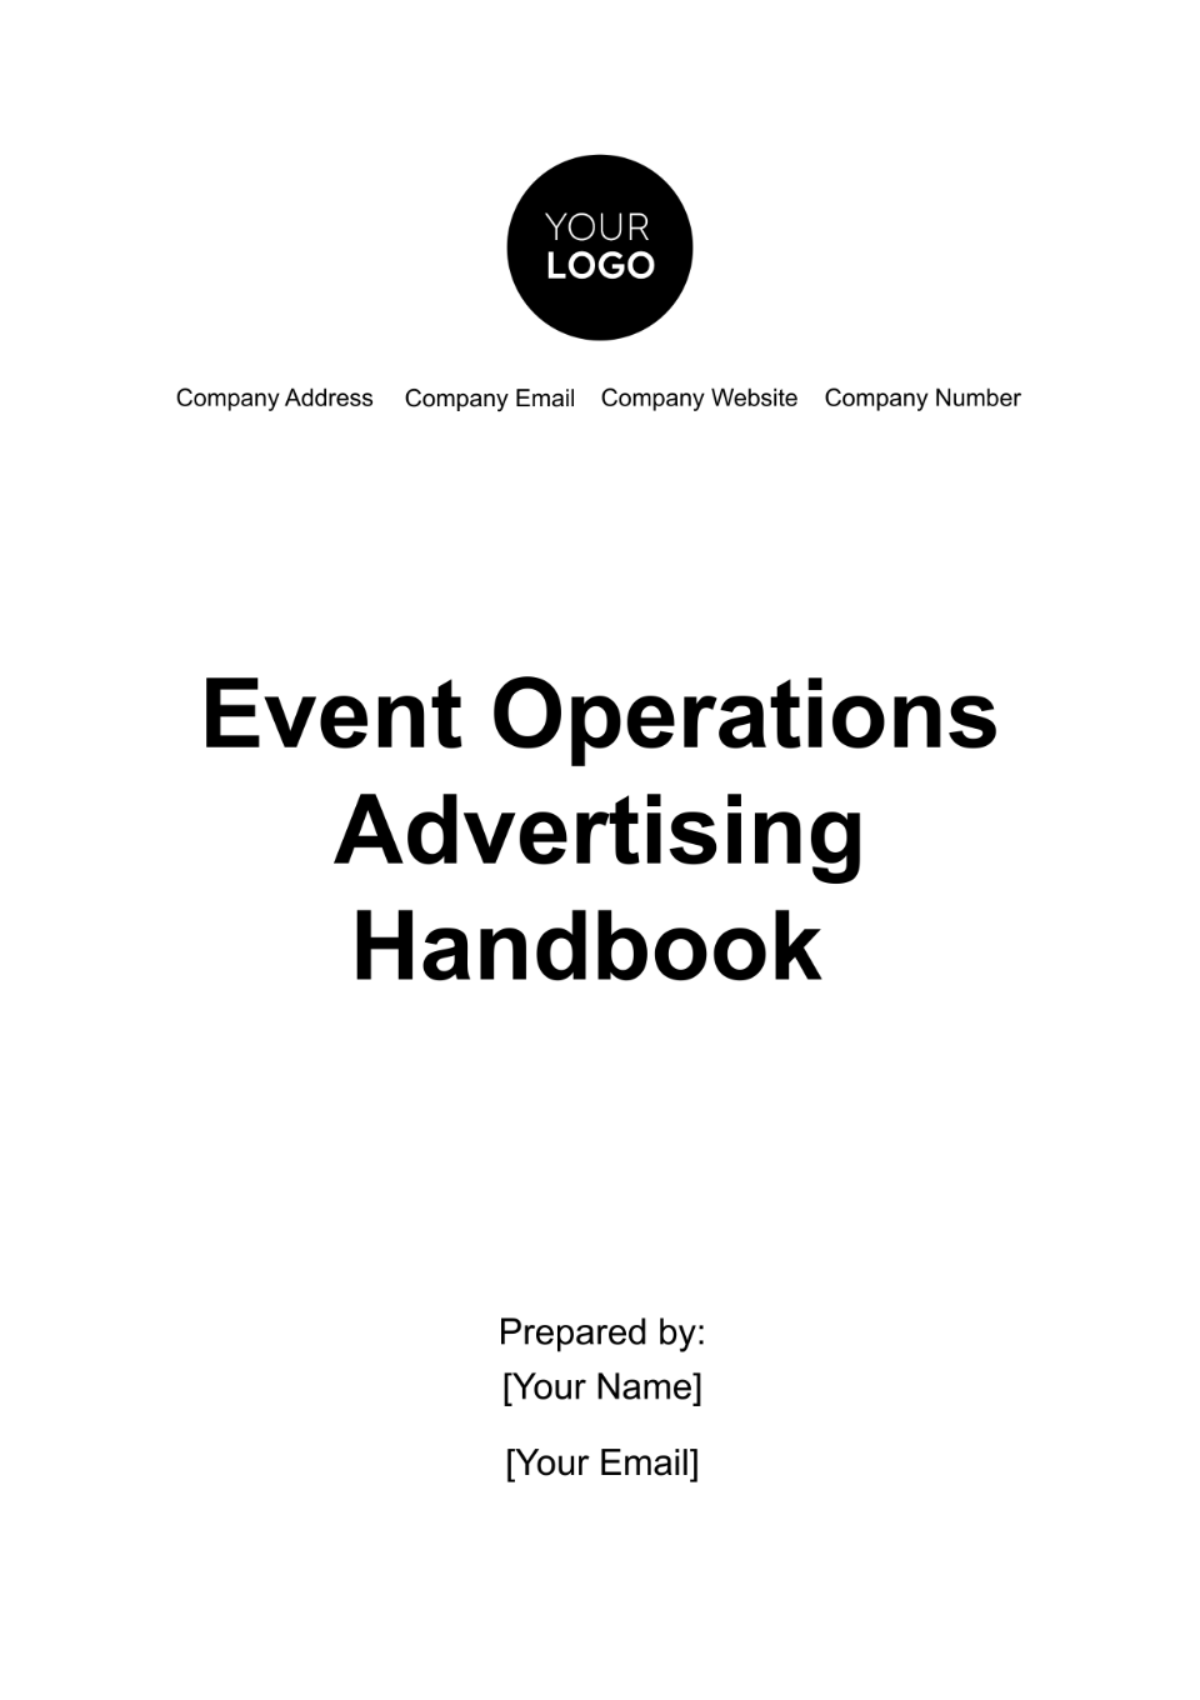 Event Operations Advertising Handbook Template